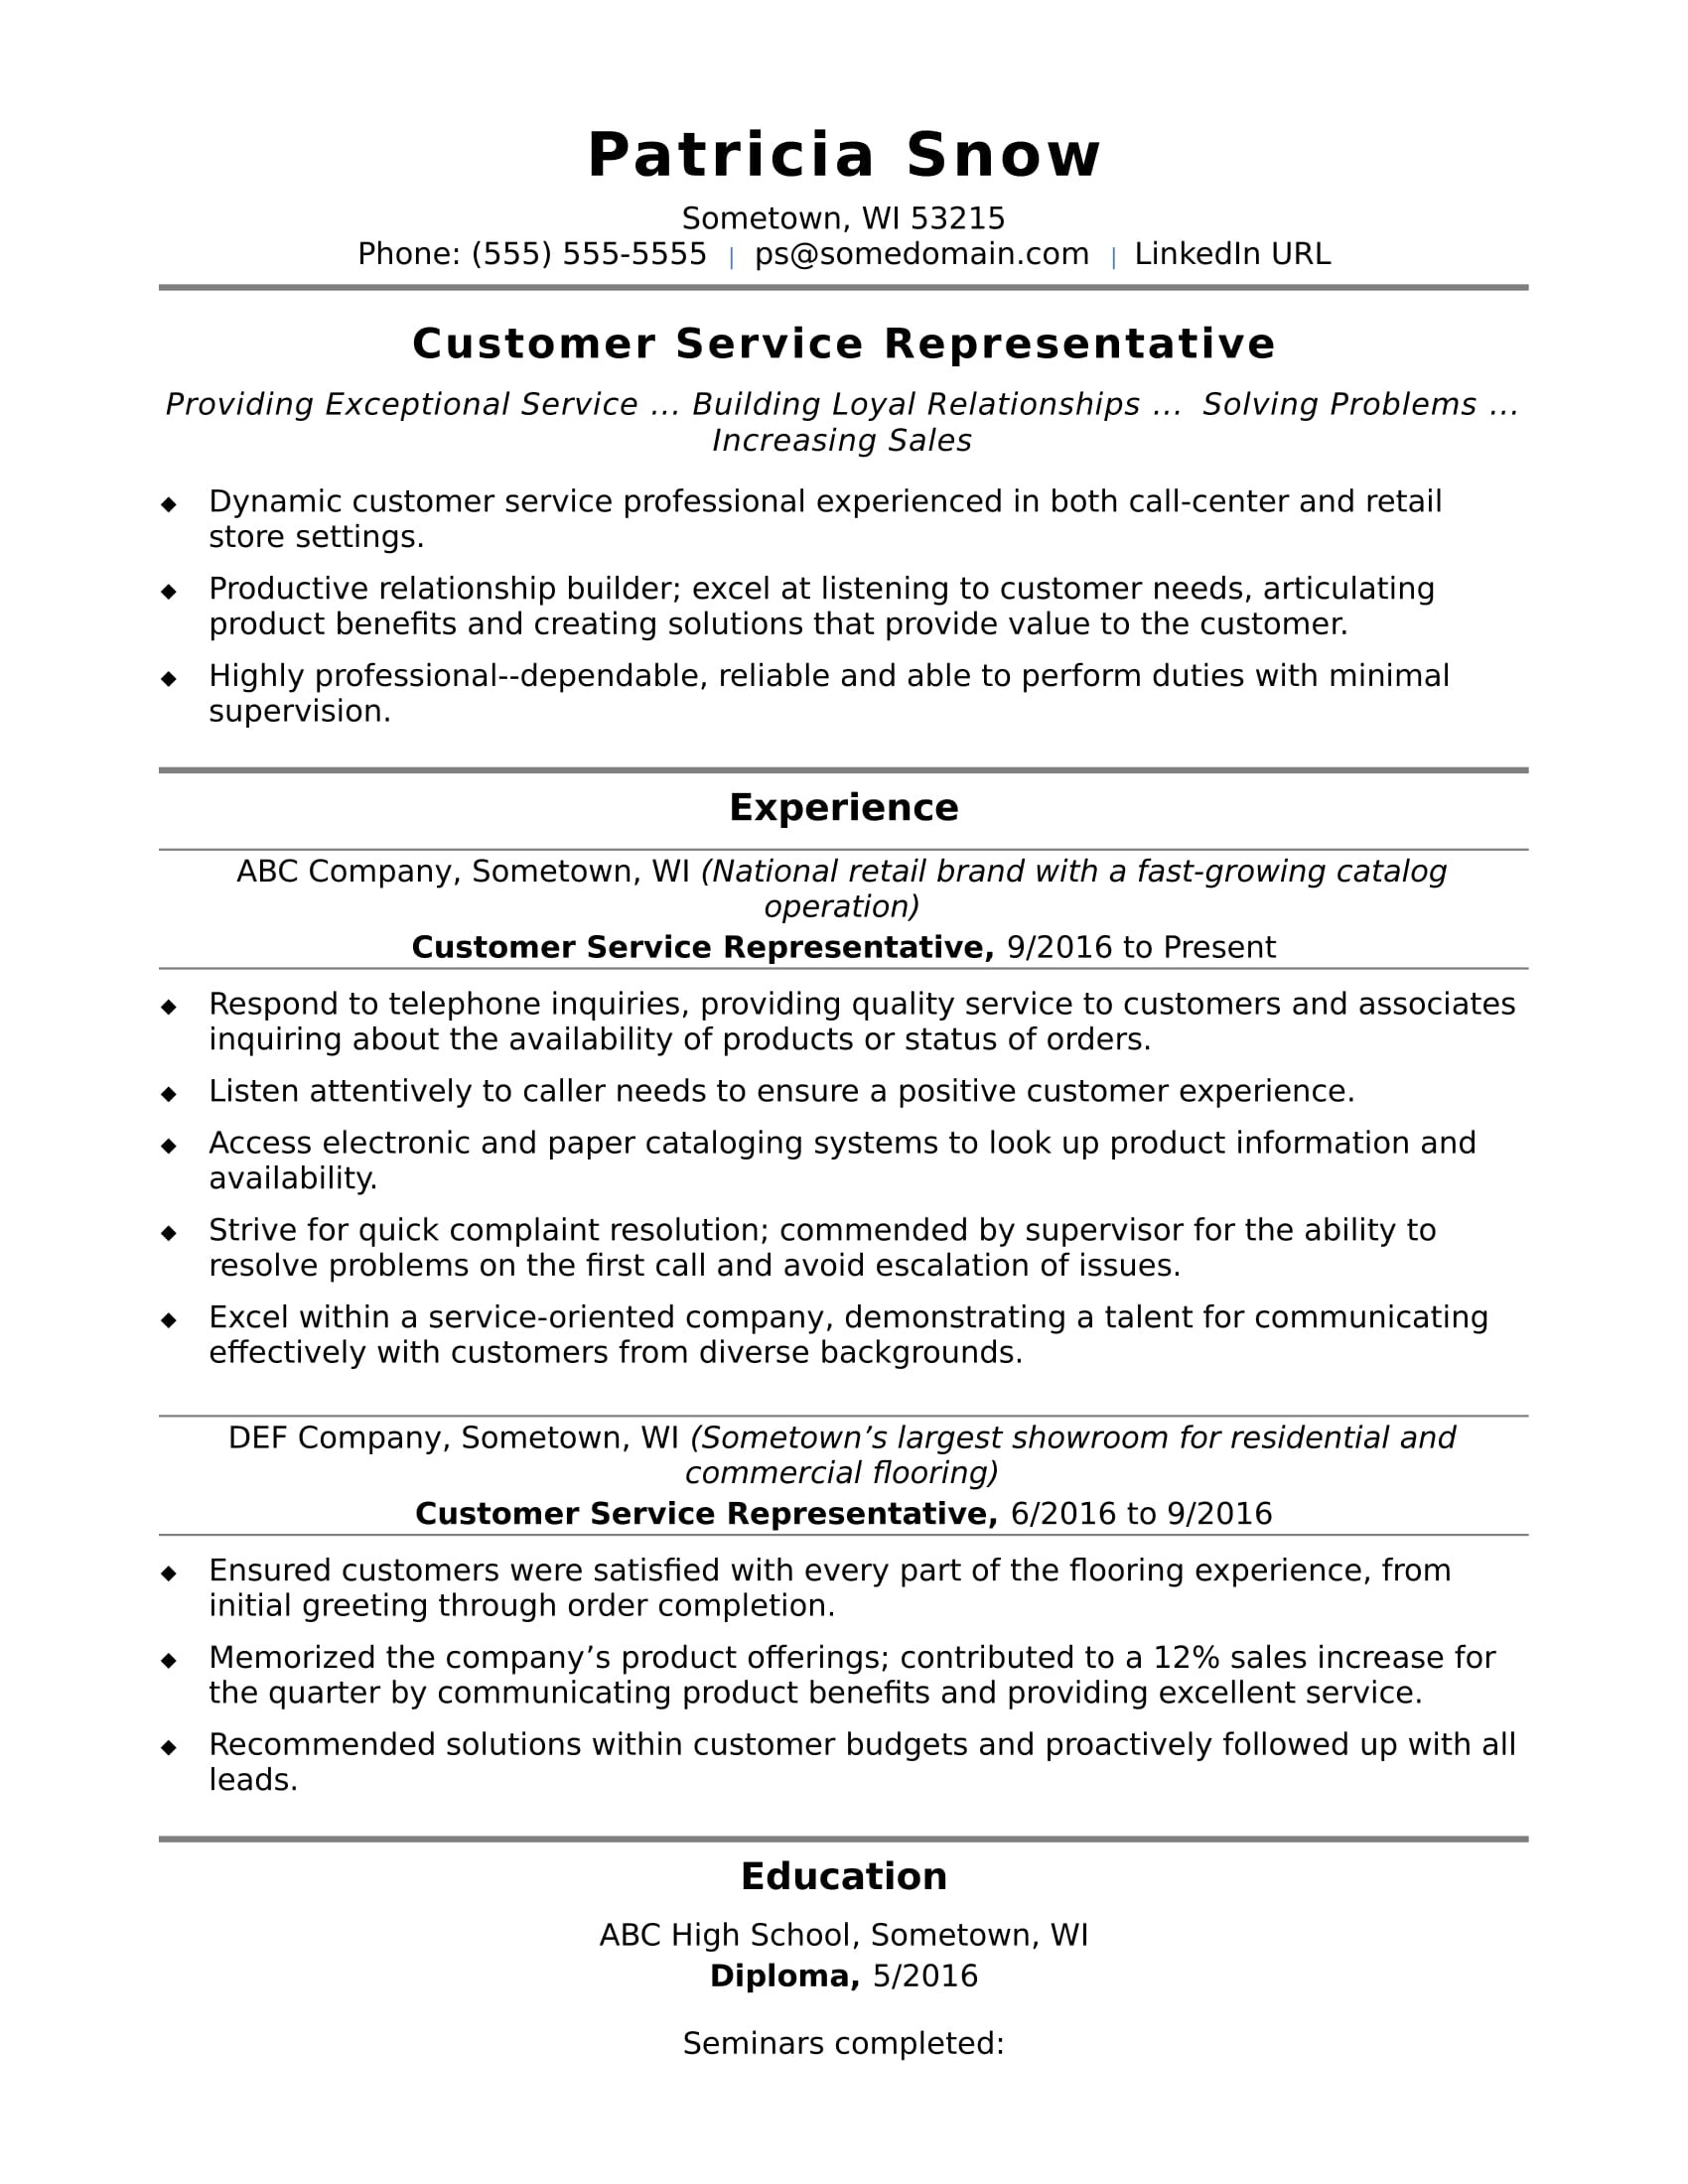 Samples Of Lists Of Skills for Customer Service Resume Entry-level Customer Service Resume Sample Monster.com